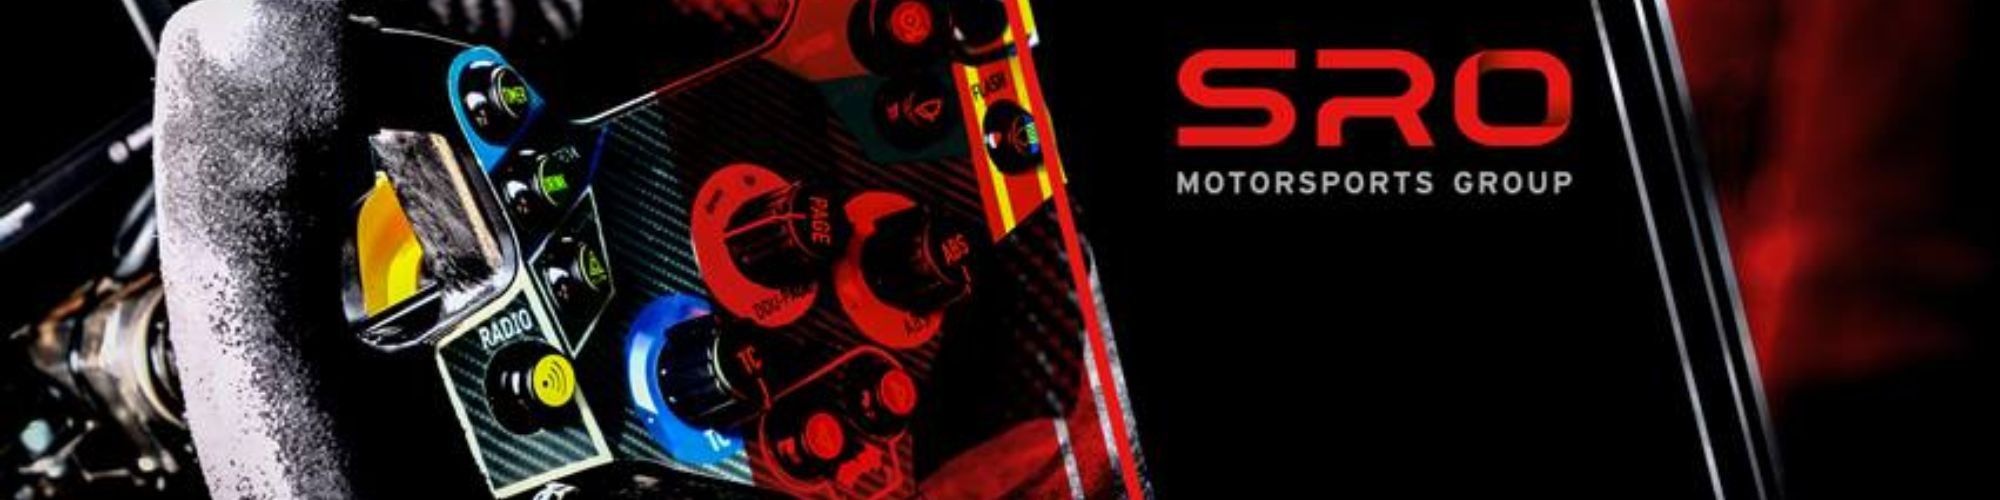 SRO Motorsports Group cover image